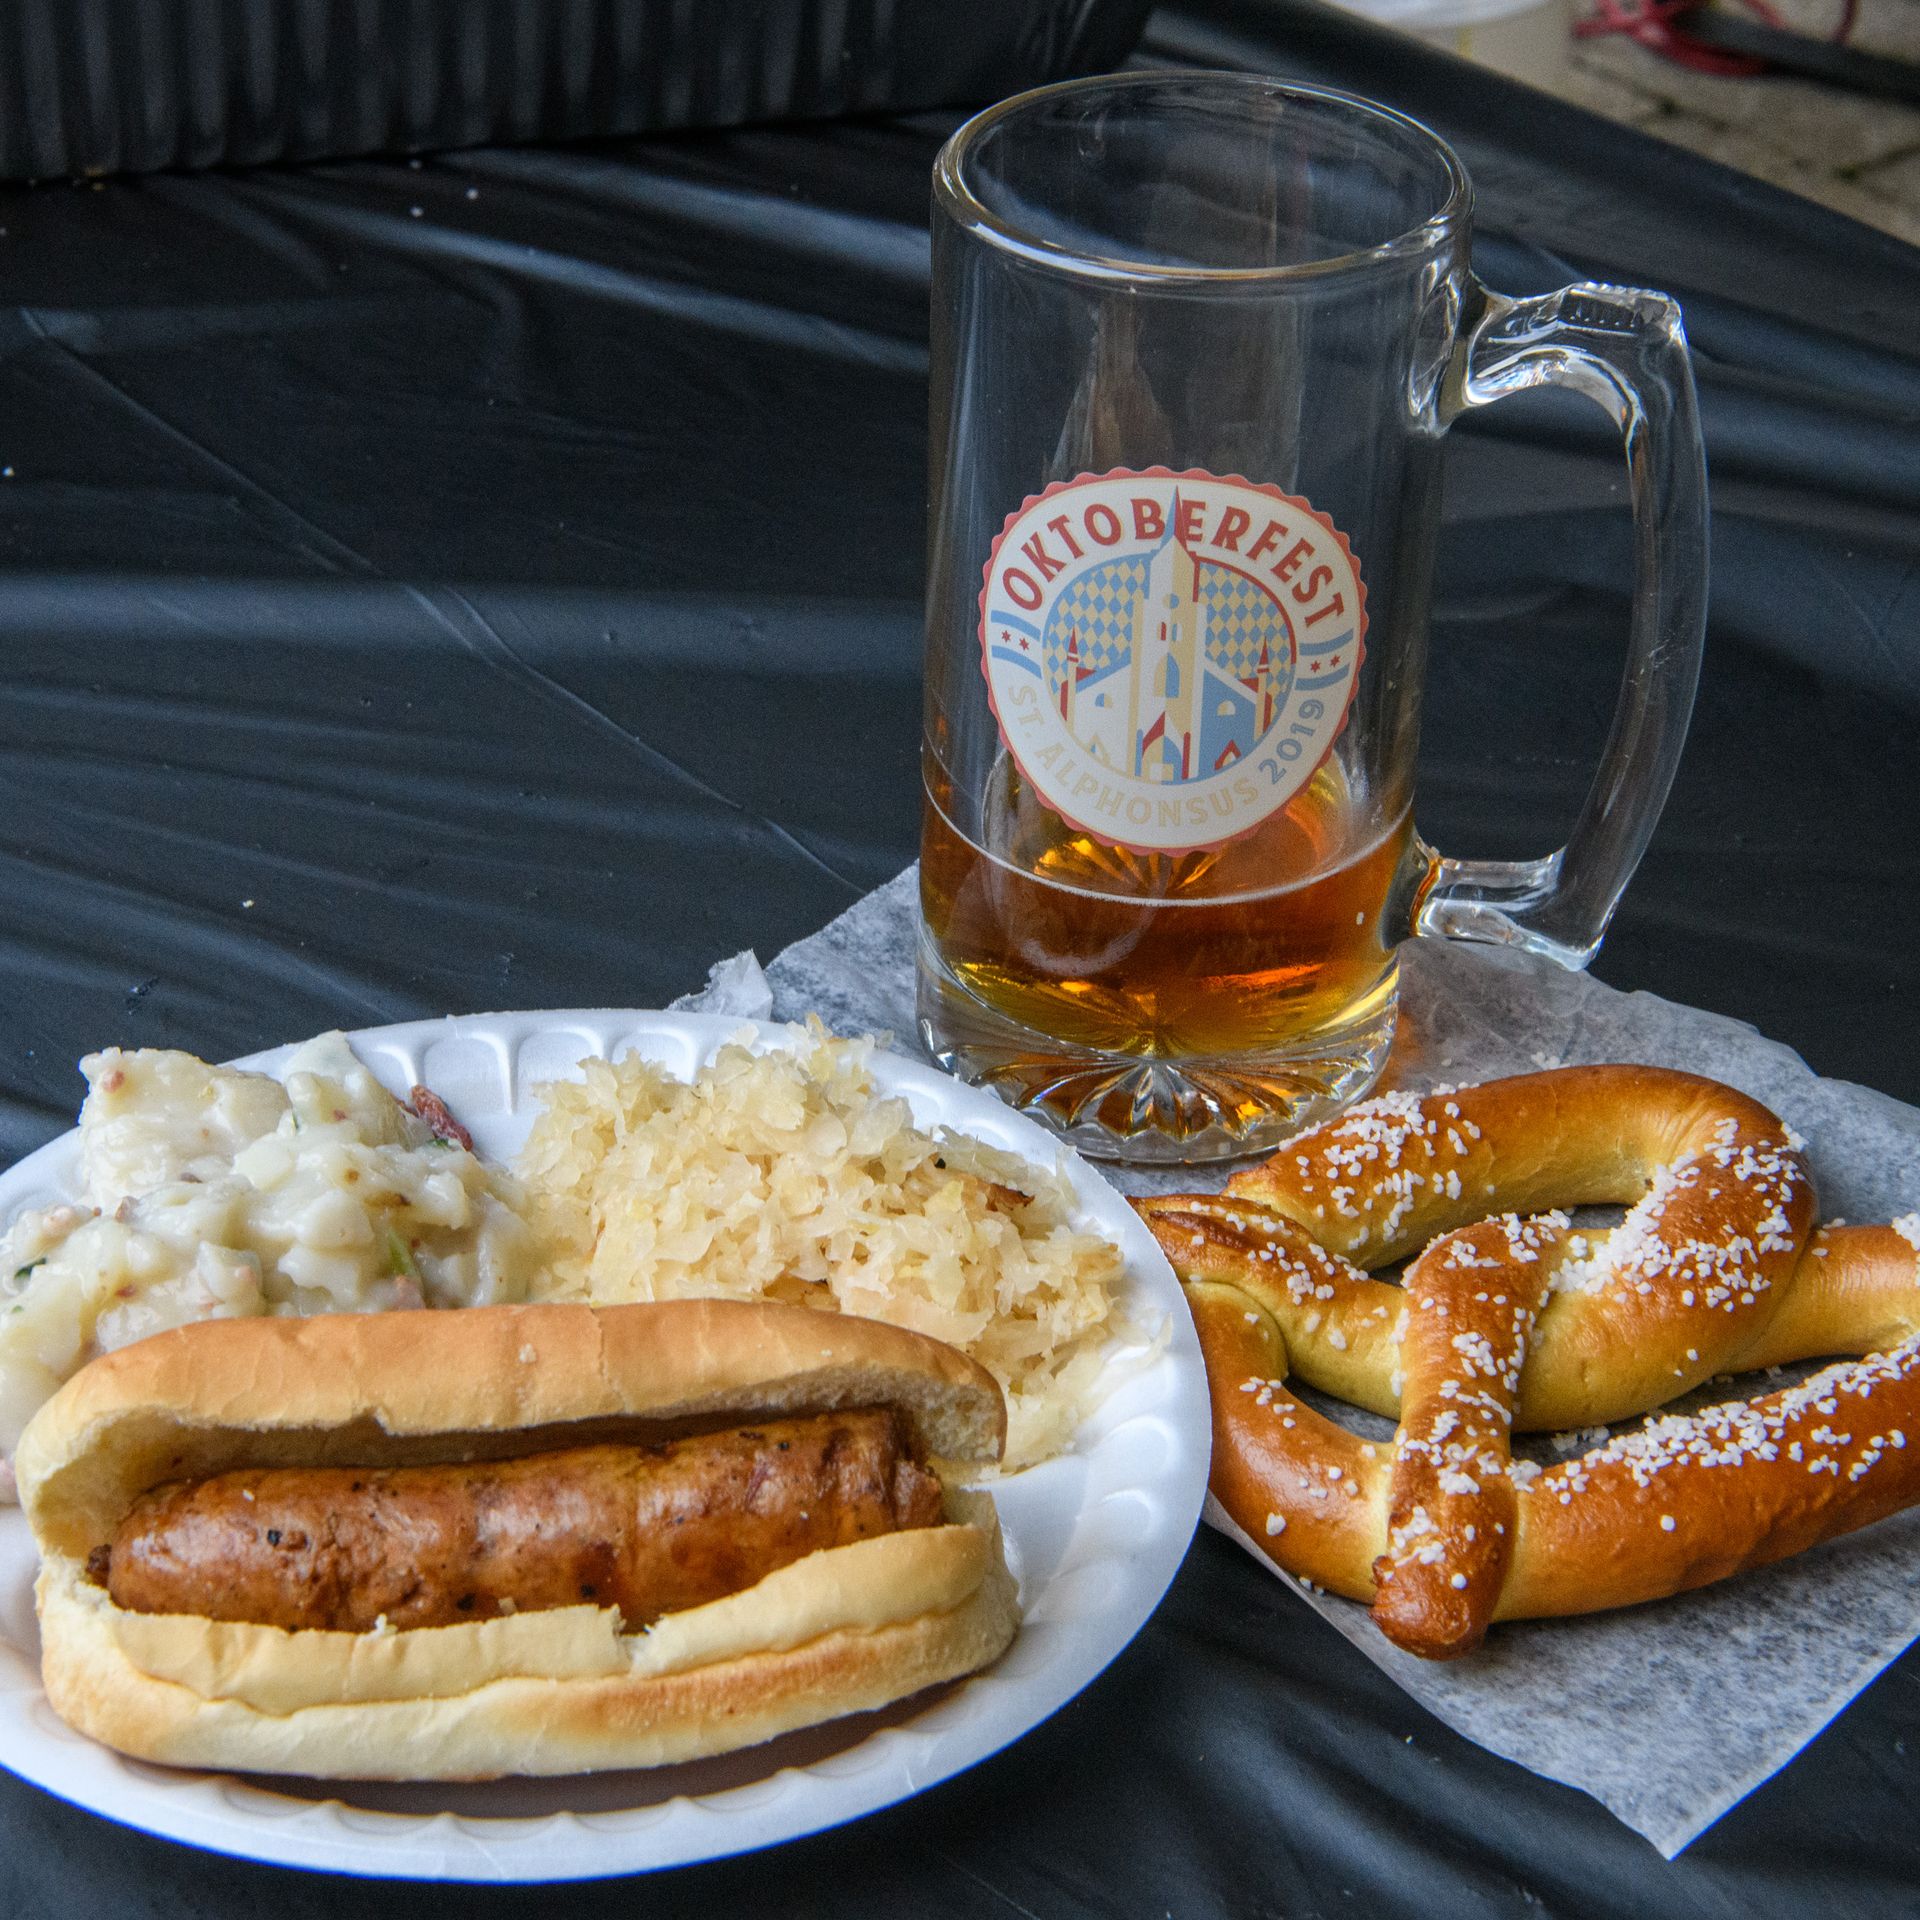 Beer and brats and pretzels